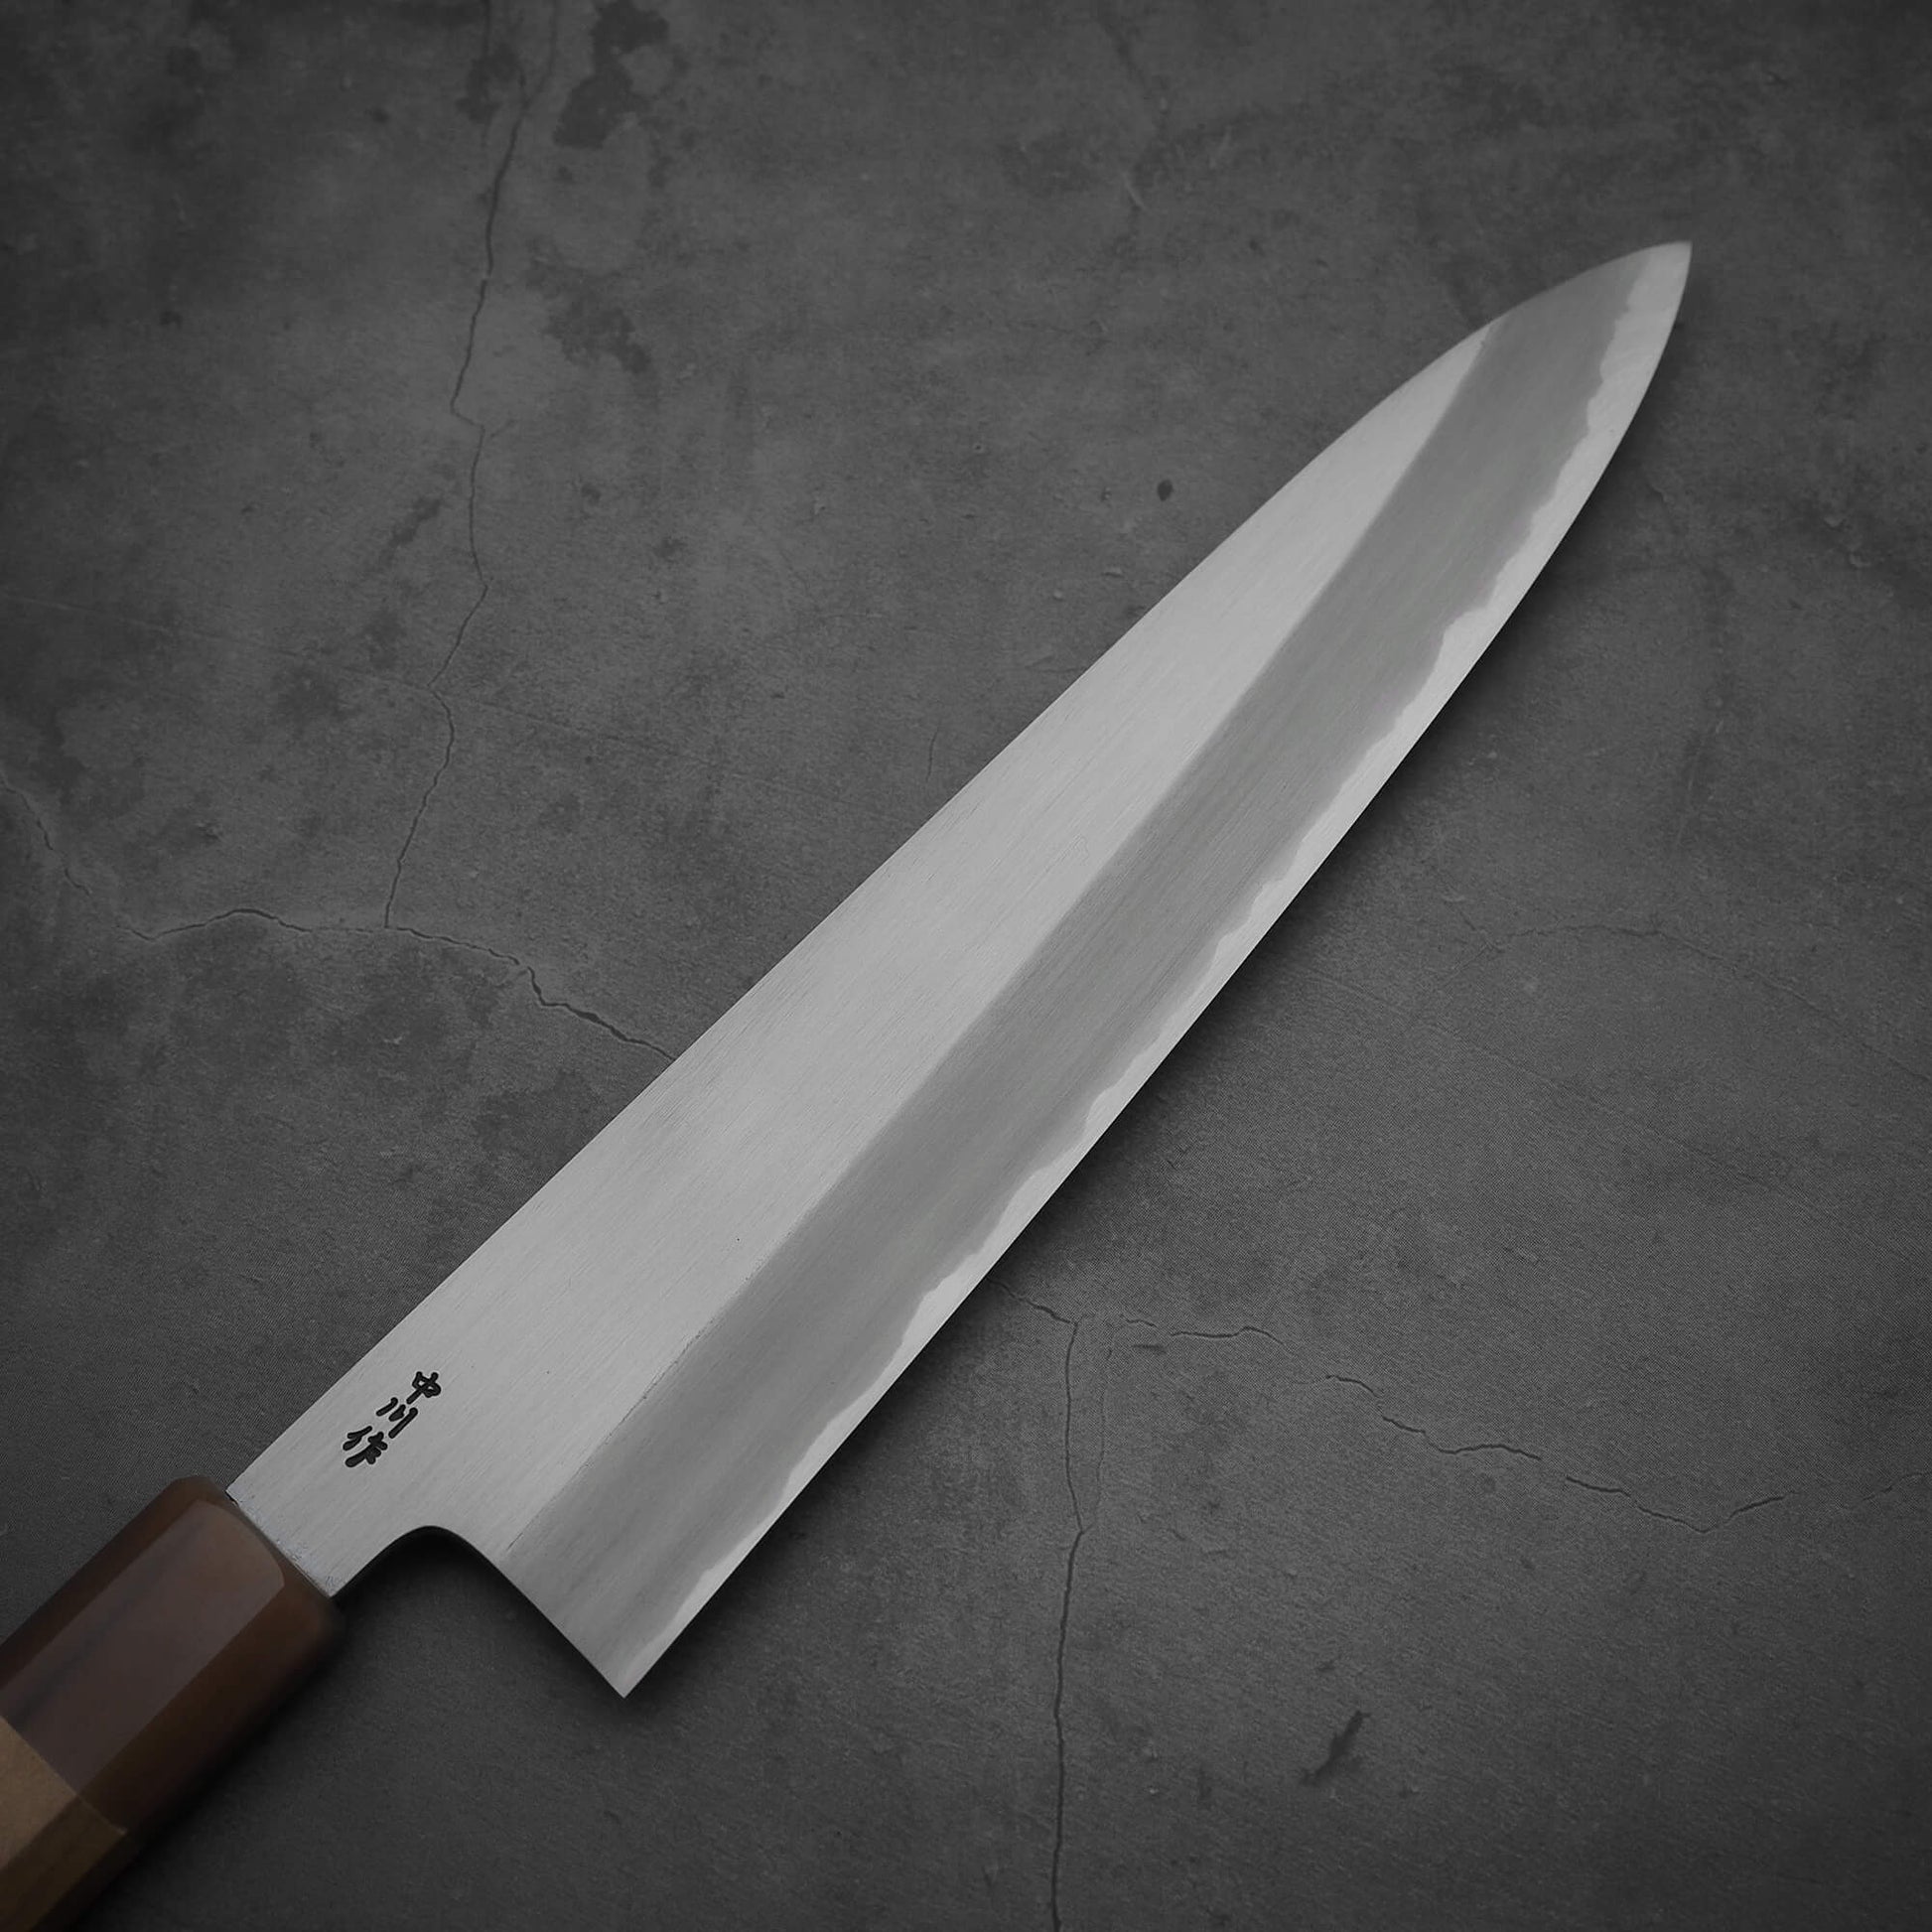 Top view of the right-side blade of Nakagawa shinogi aogami#2 gyuto knife